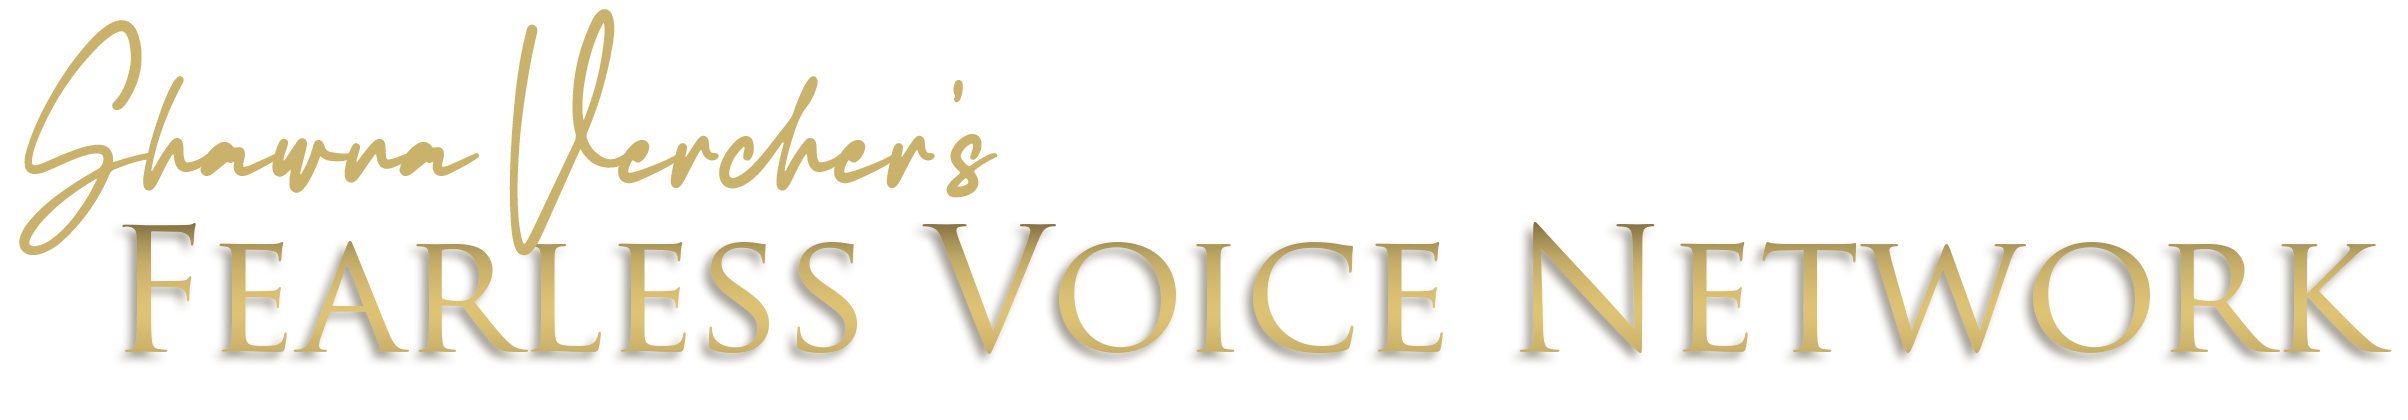 Shawna Vercher's Fearless Voice Network